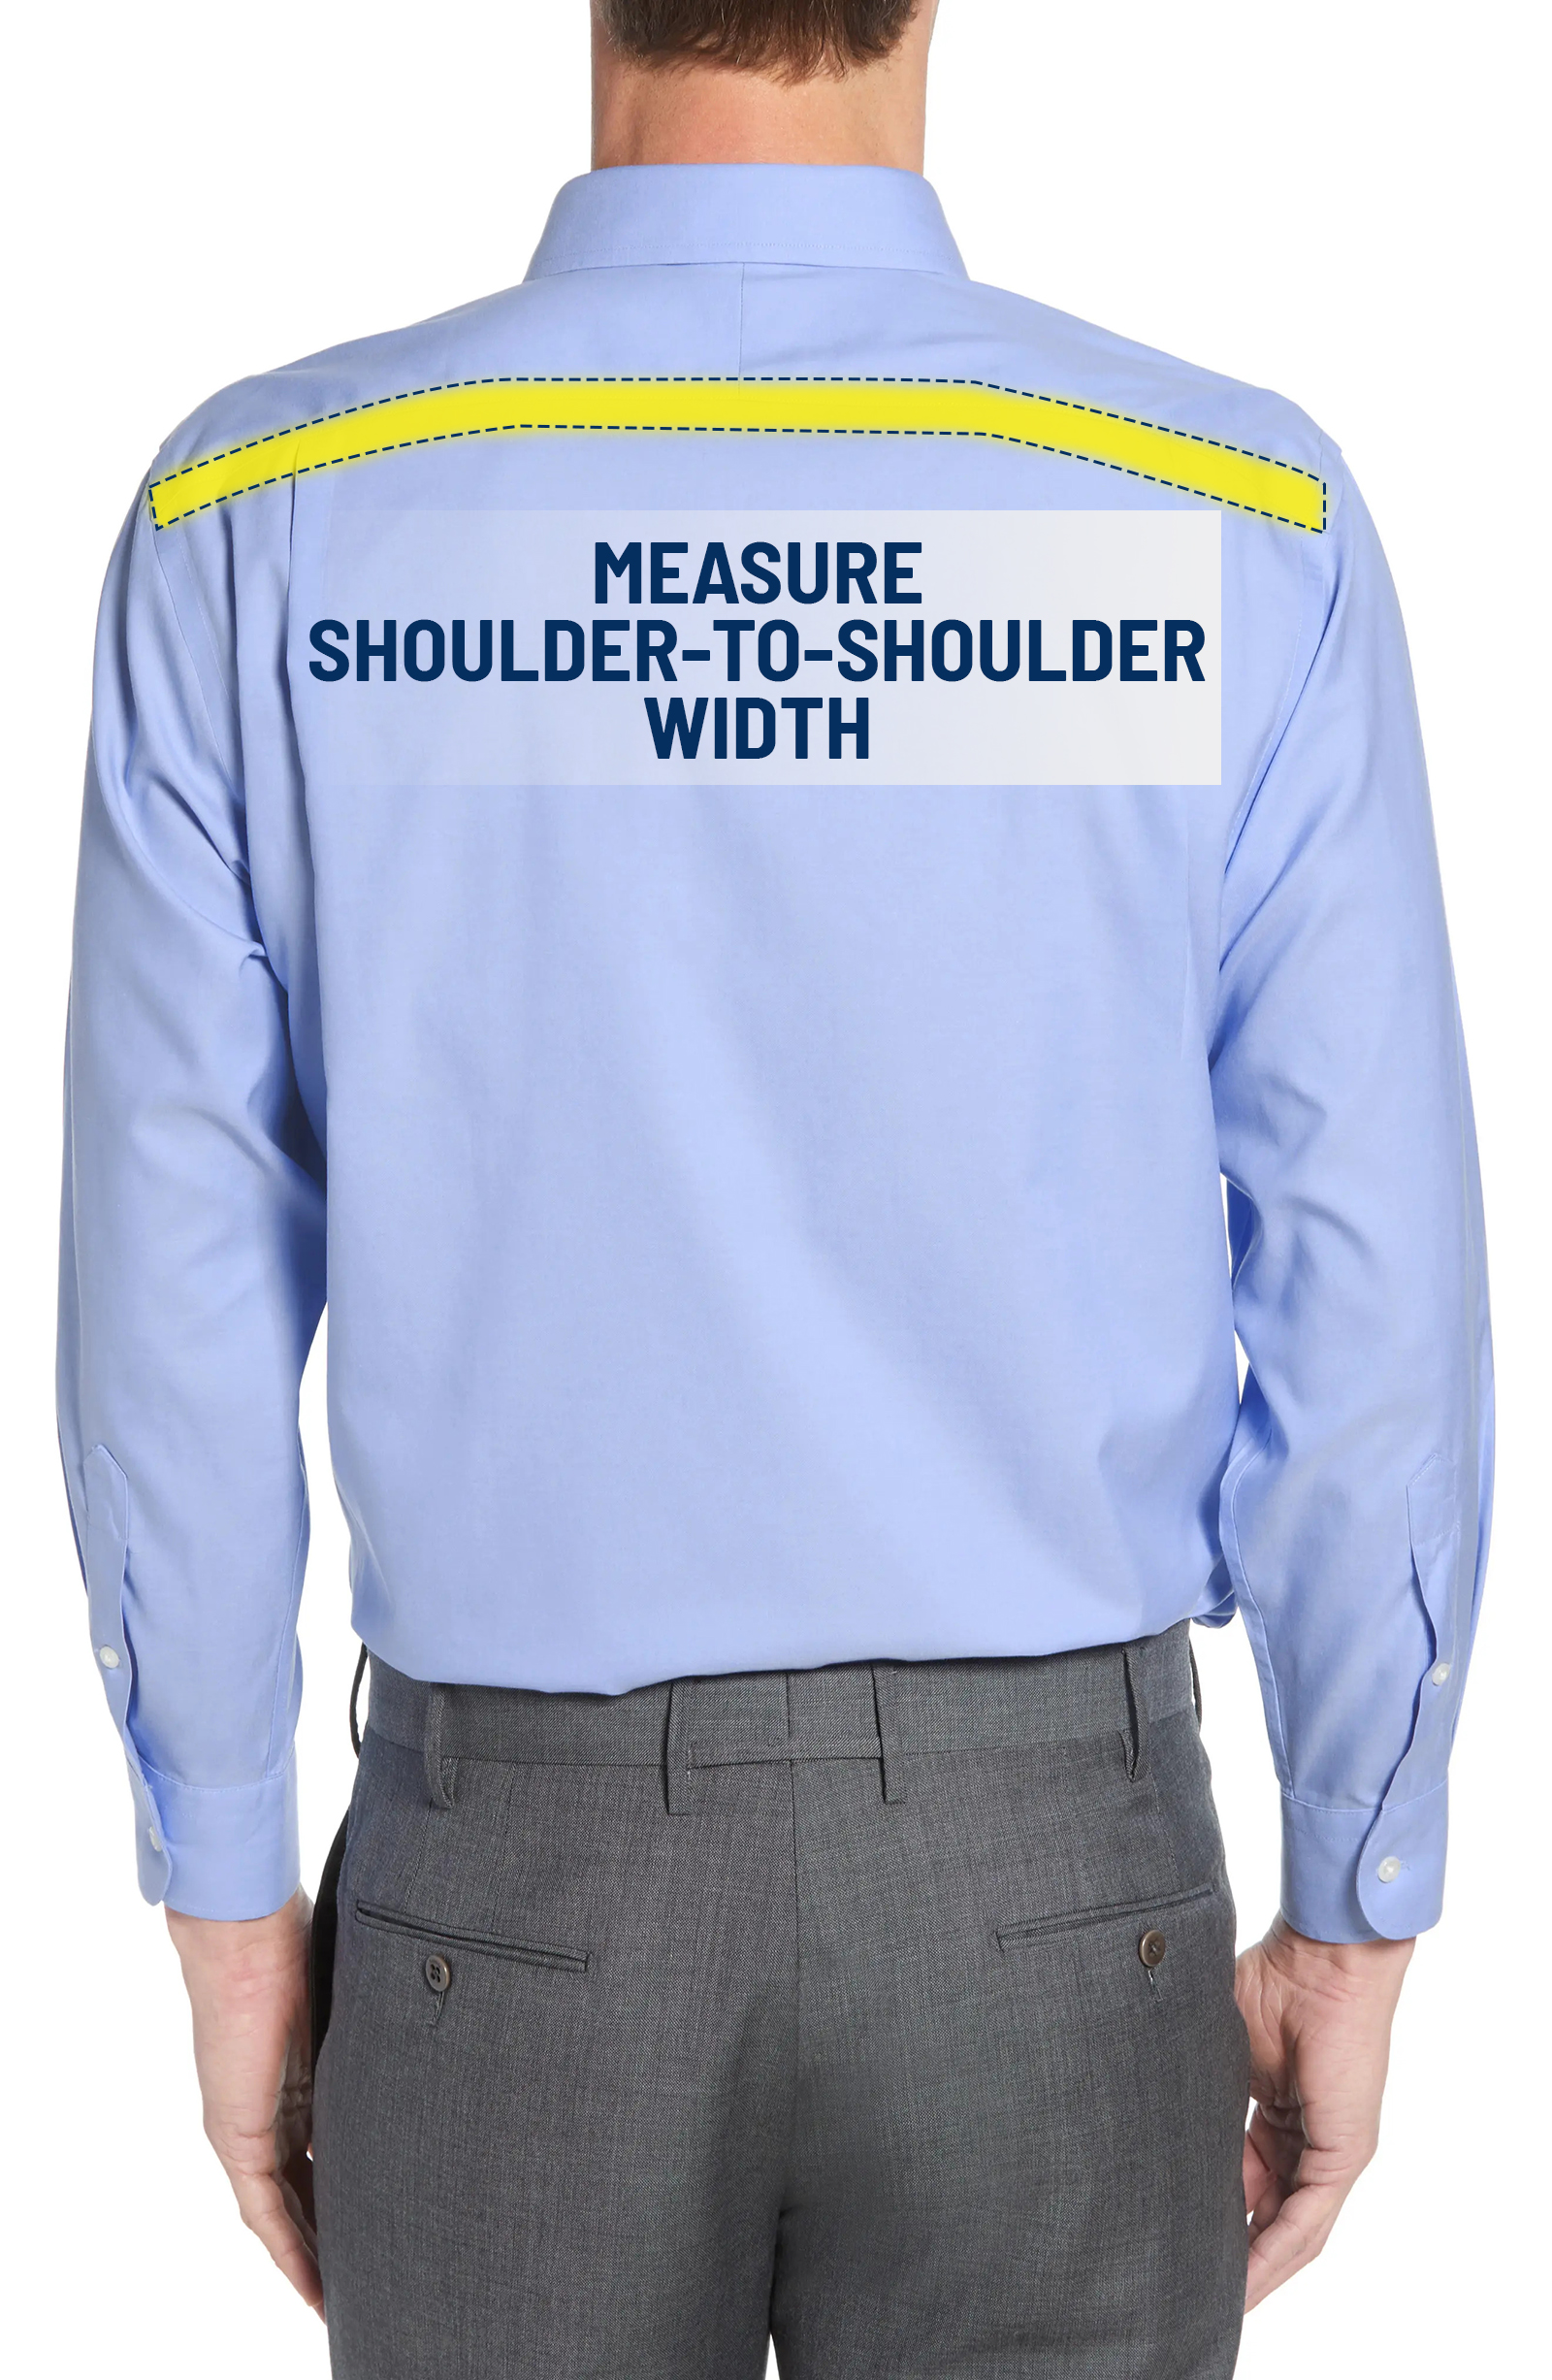 How to measure suit shoulder-to-shoulder width